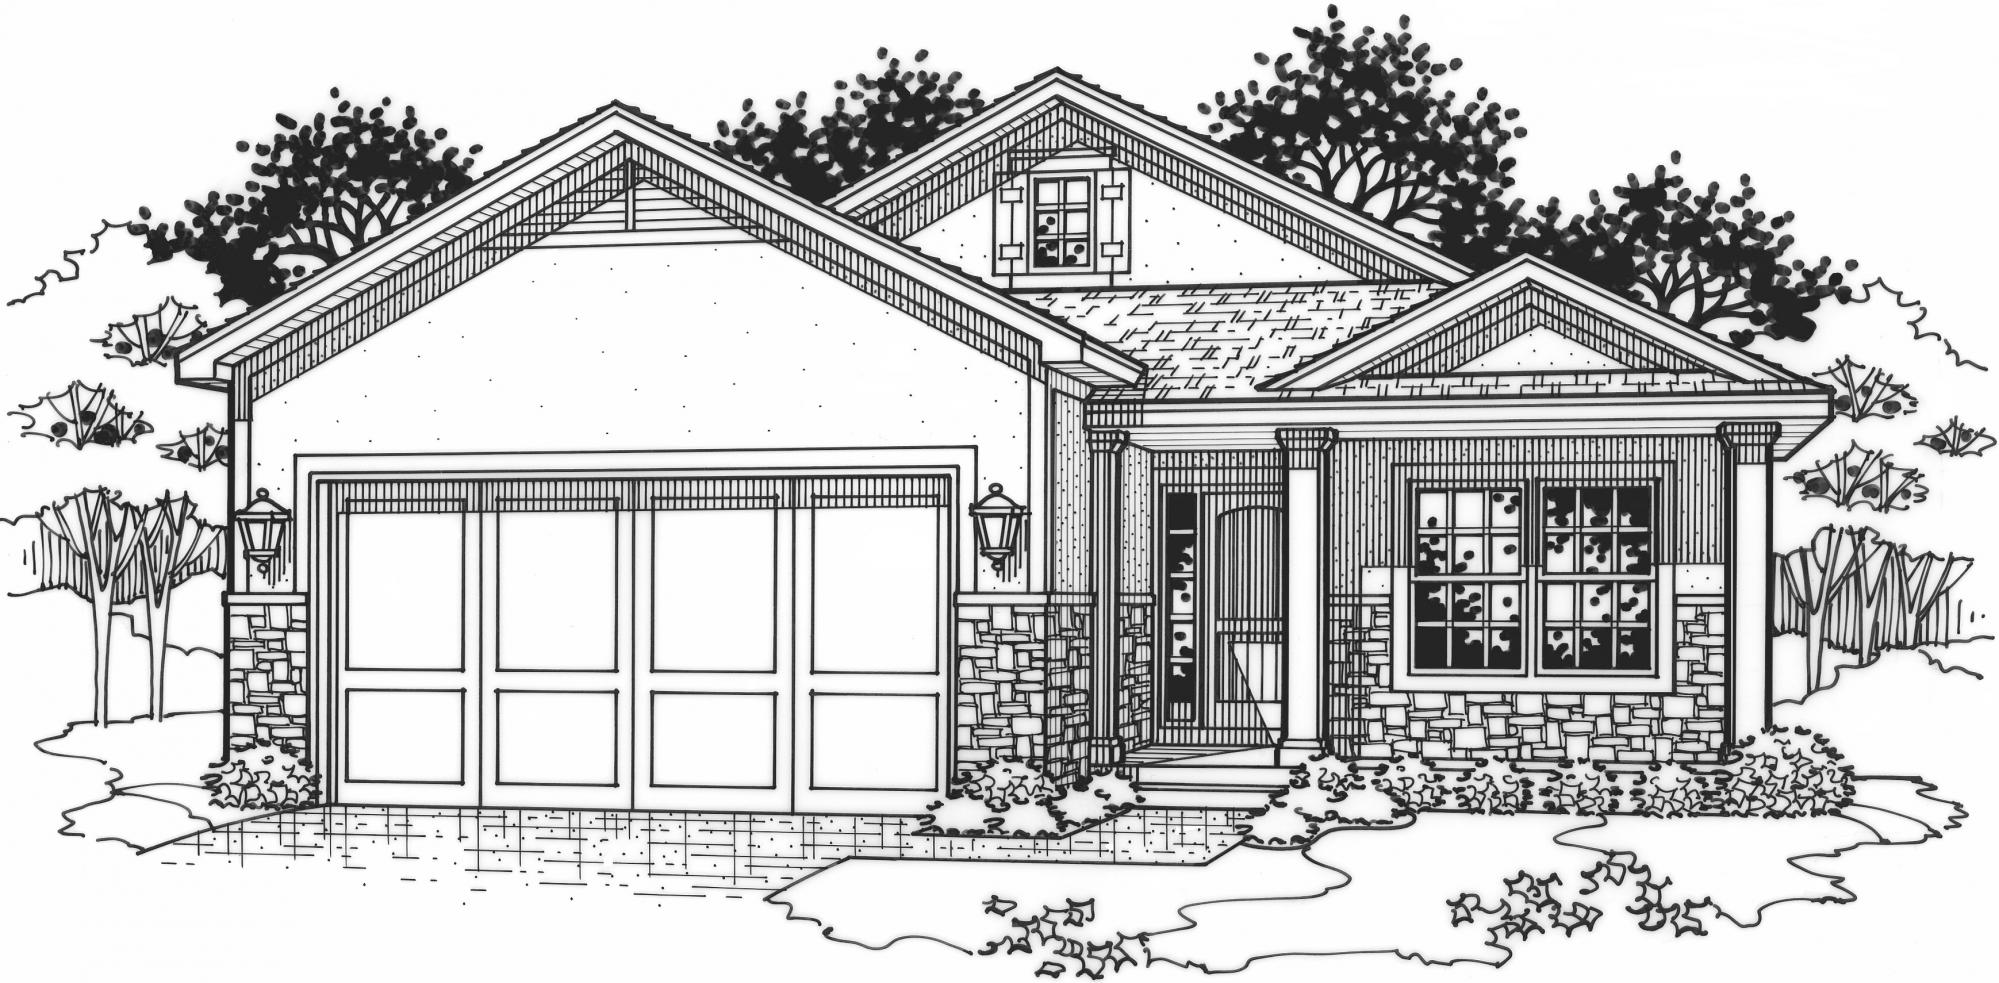 black and white rendering of a Berkley model from Lambie custom homes